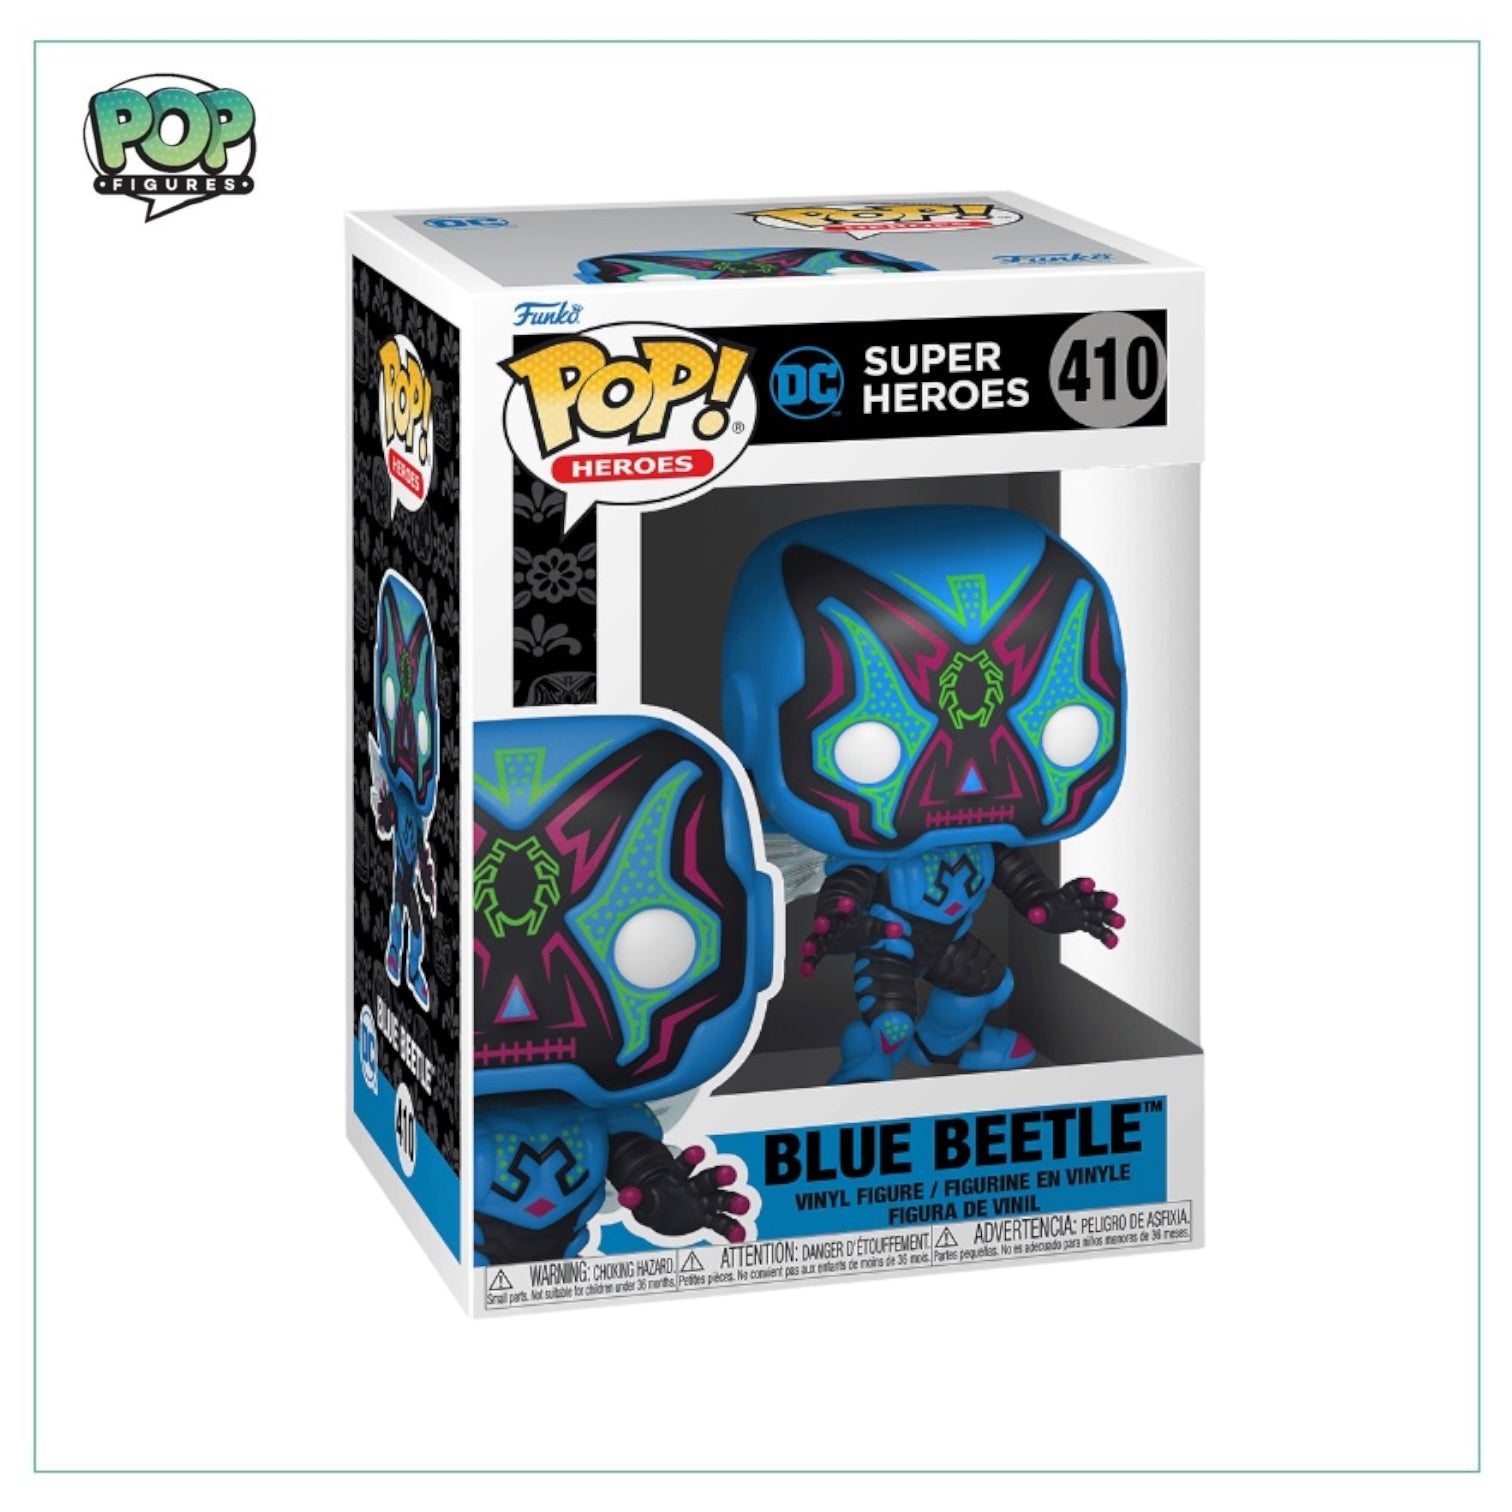 Blue Beetle #410 Funko Pop! DC Super Heroes